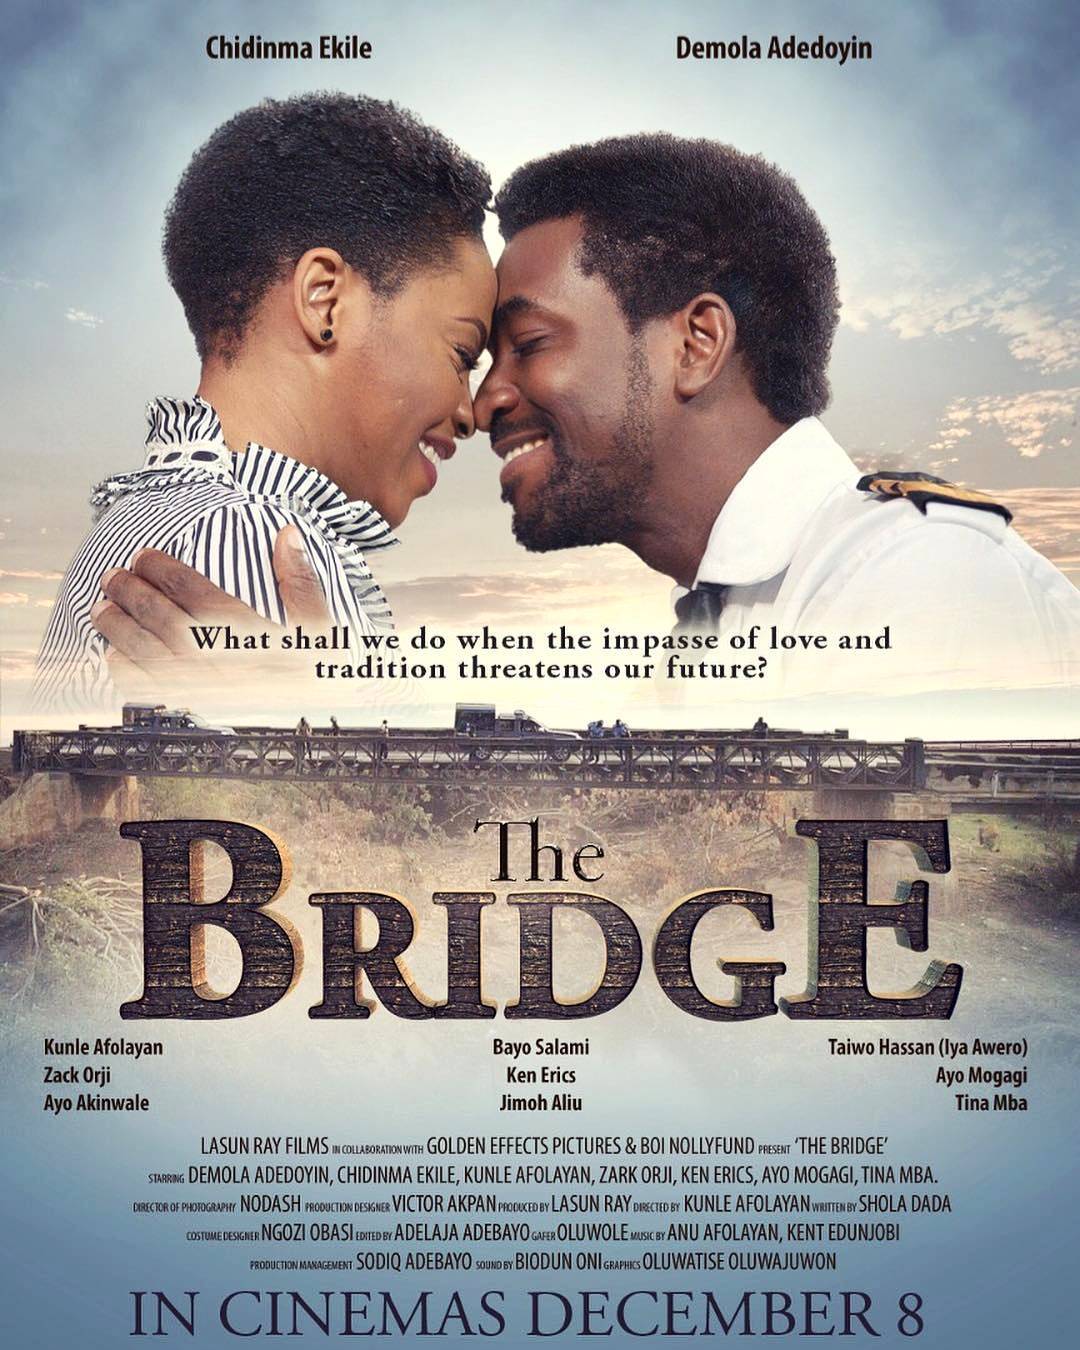 Chidinma Ekile’s Debut movie "The Bridge" set to hit Cinemas on the 8th December